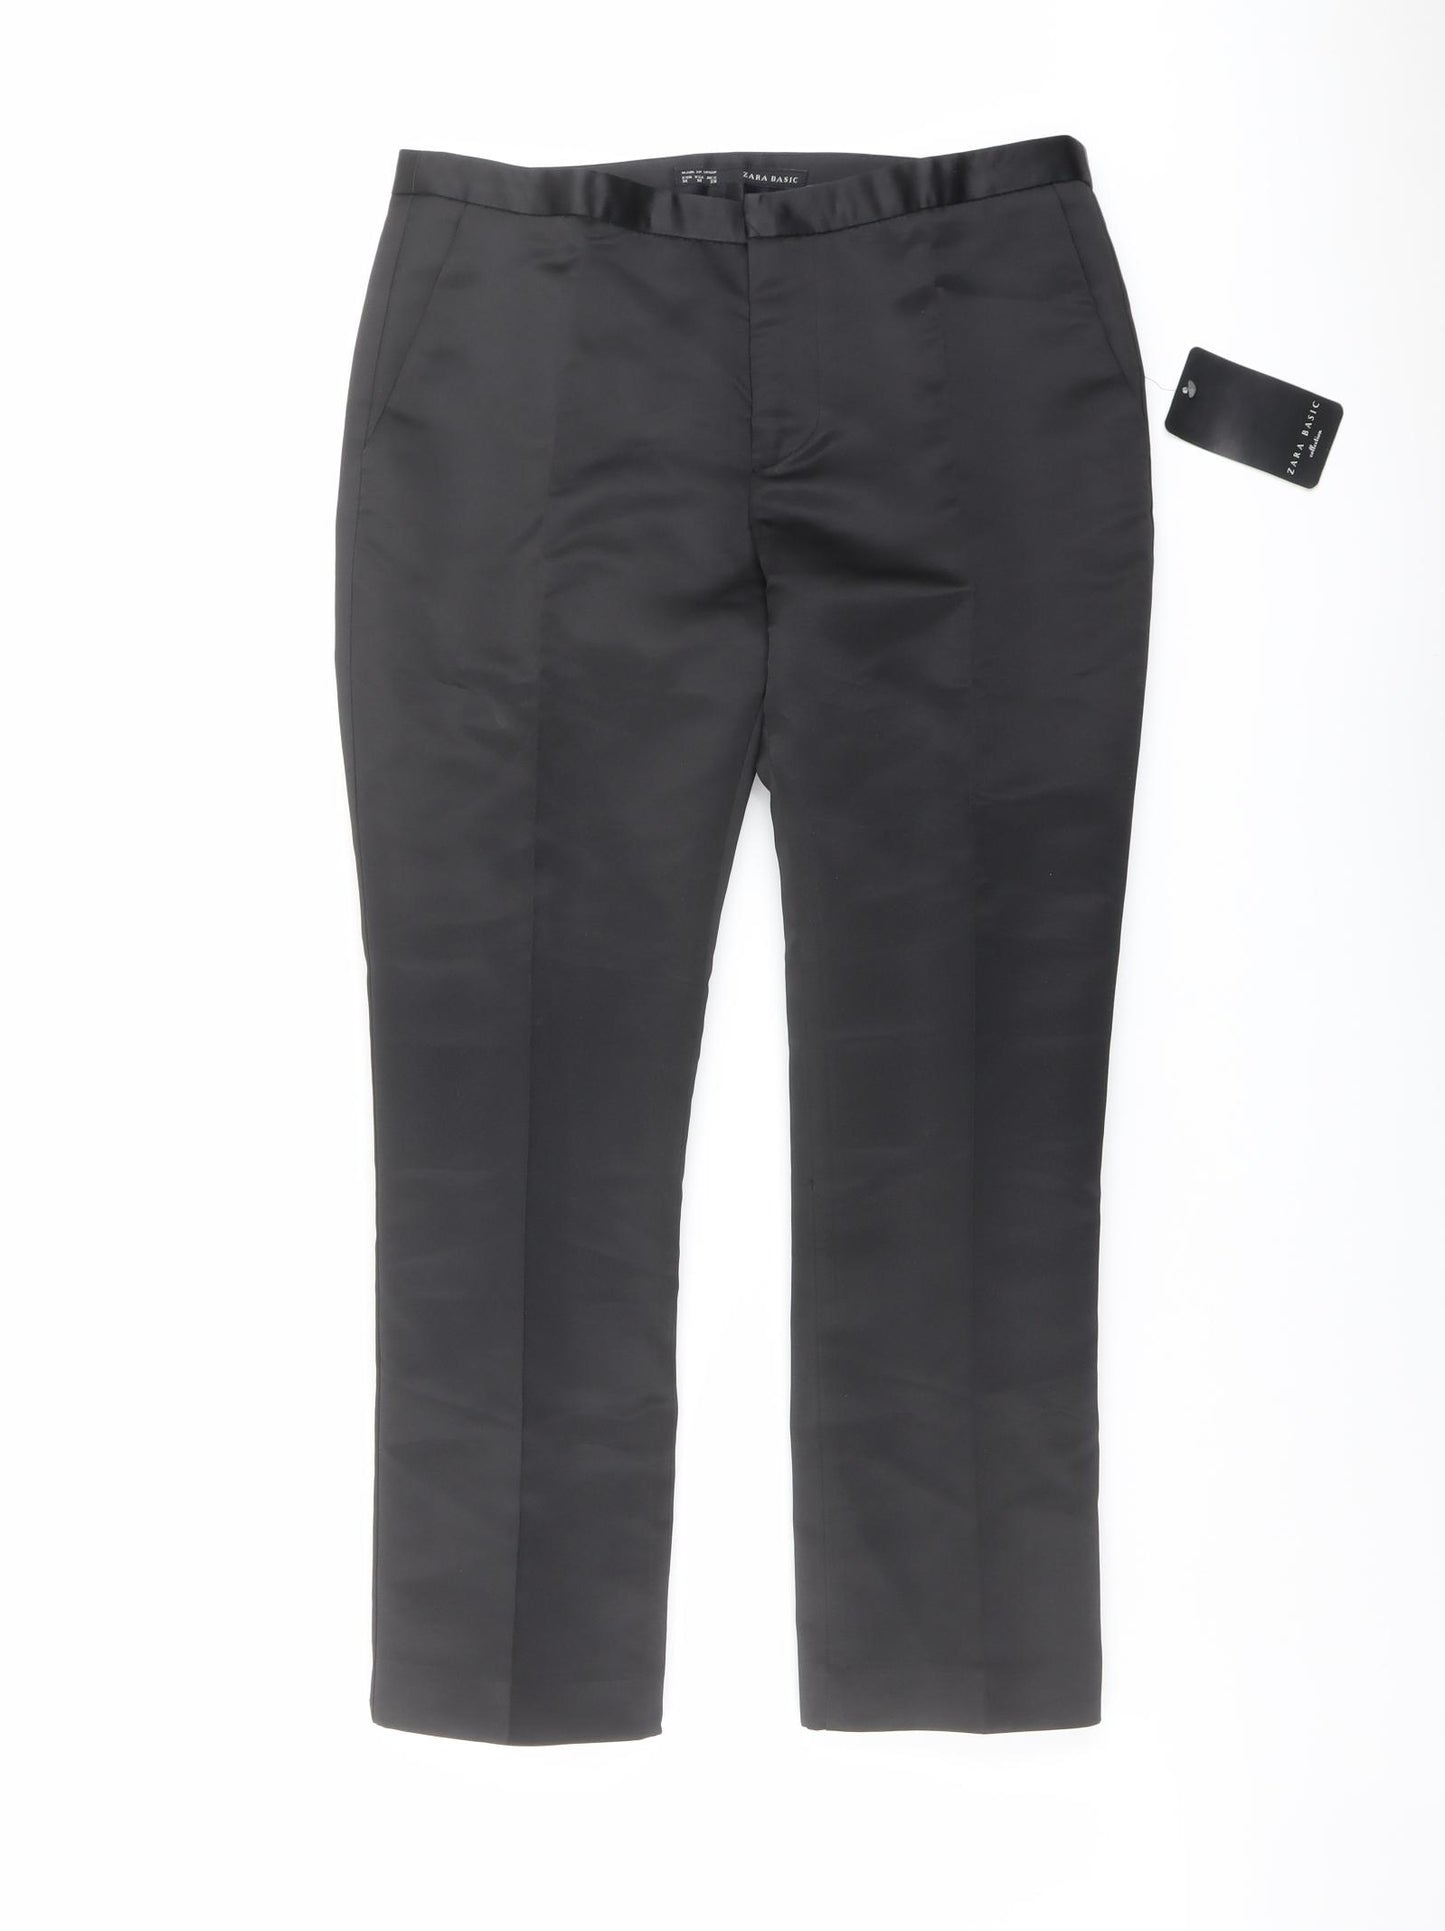 Zara Womens Black Polyester Dress Pants Trousers Size M L25 in Regular Button